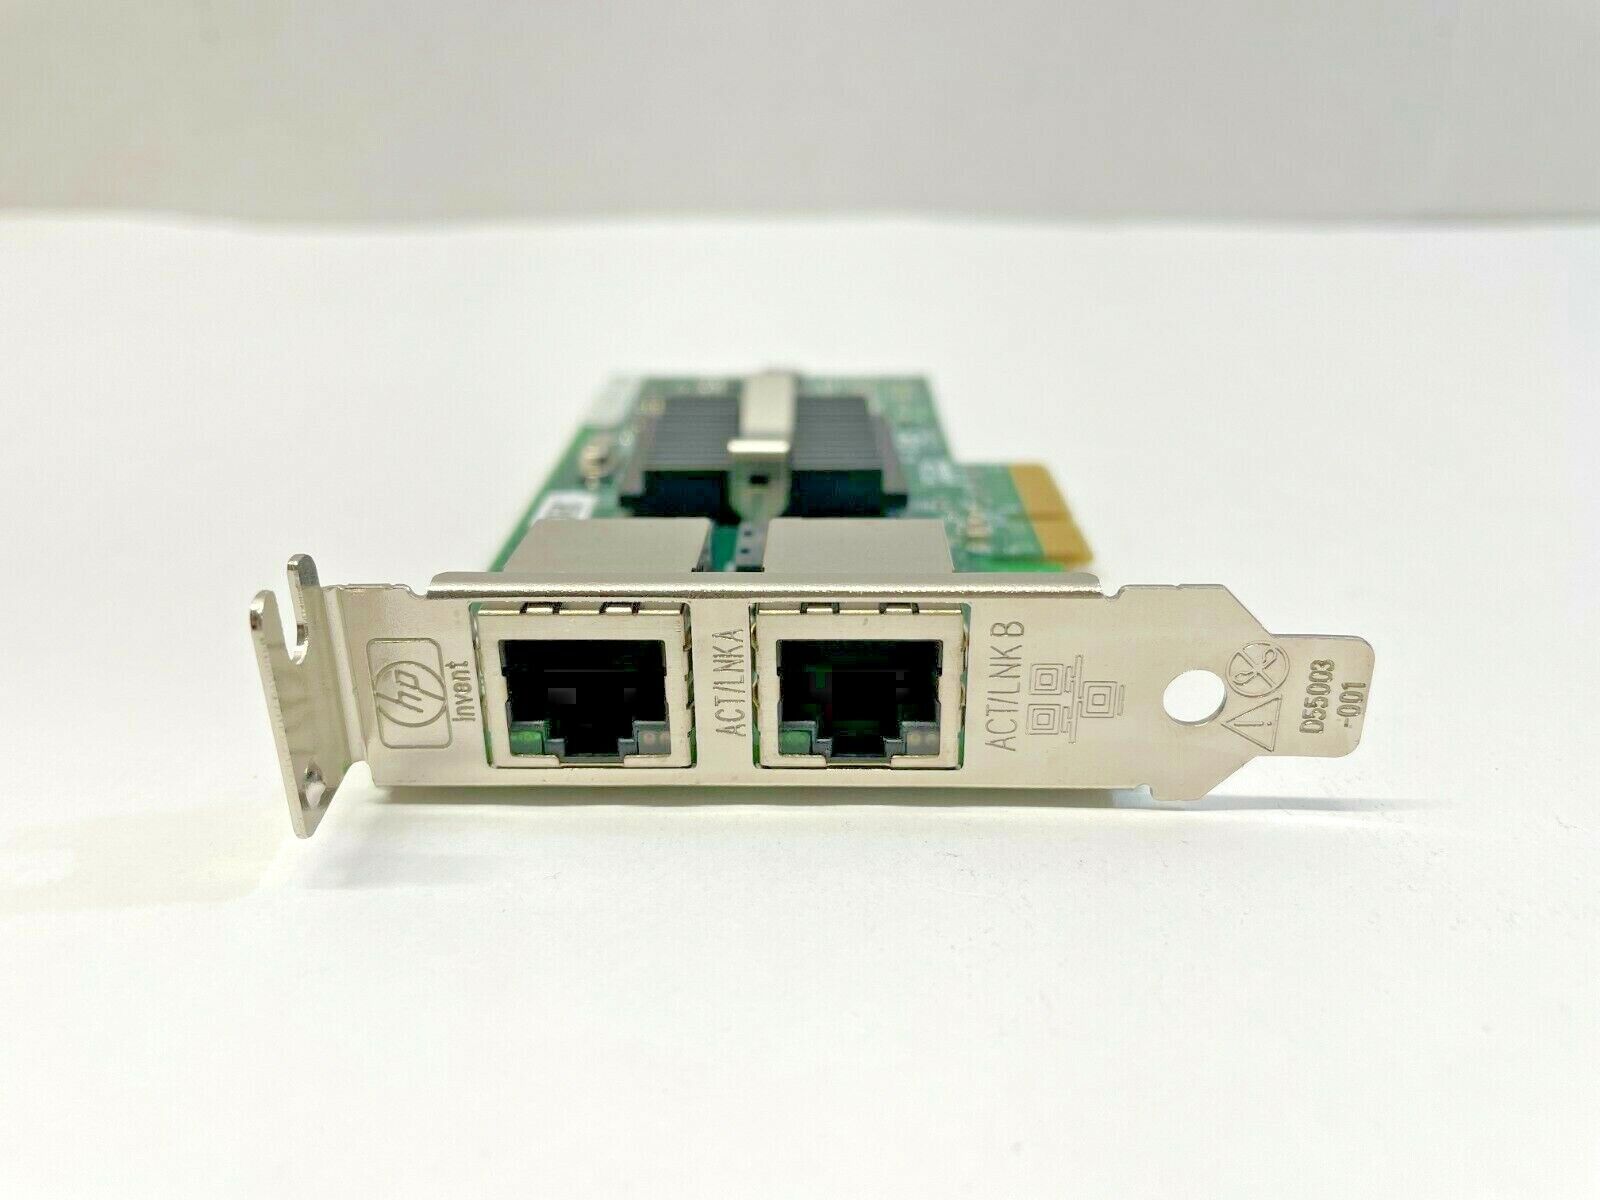 Sun 371-0905-03 Intel D28207-005 PCI-E Dual Port Gigabit Ethernet Server Adapter